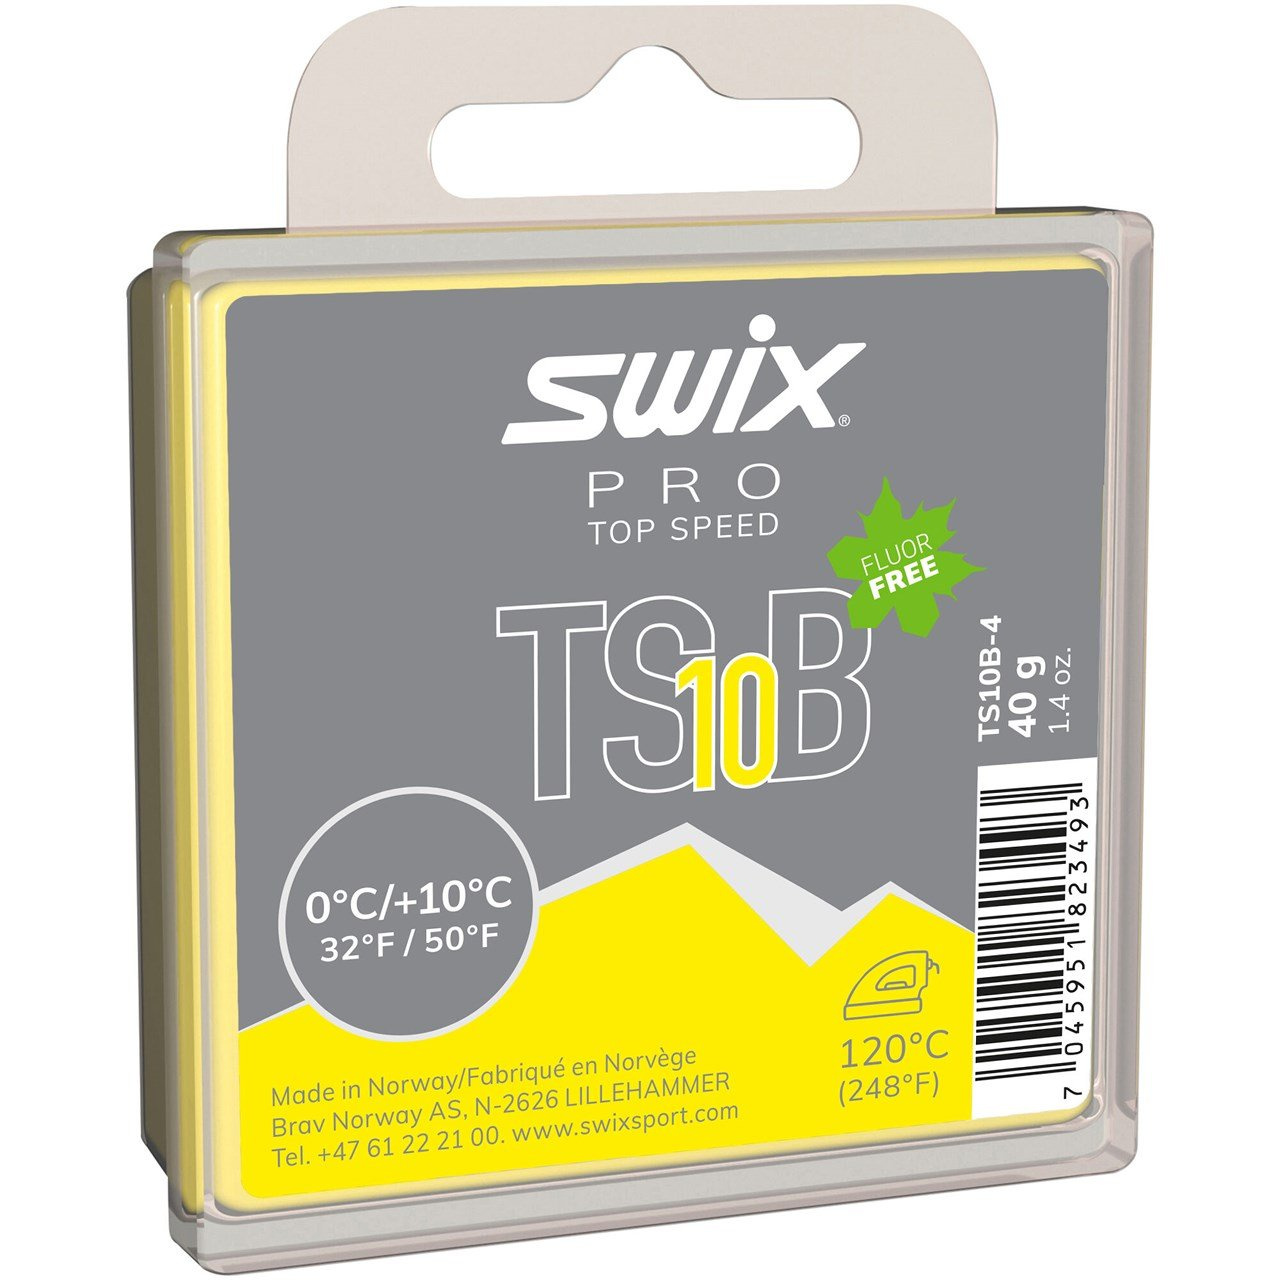 Swix Top Speed TS10B-4 (0/+10°C) 40g